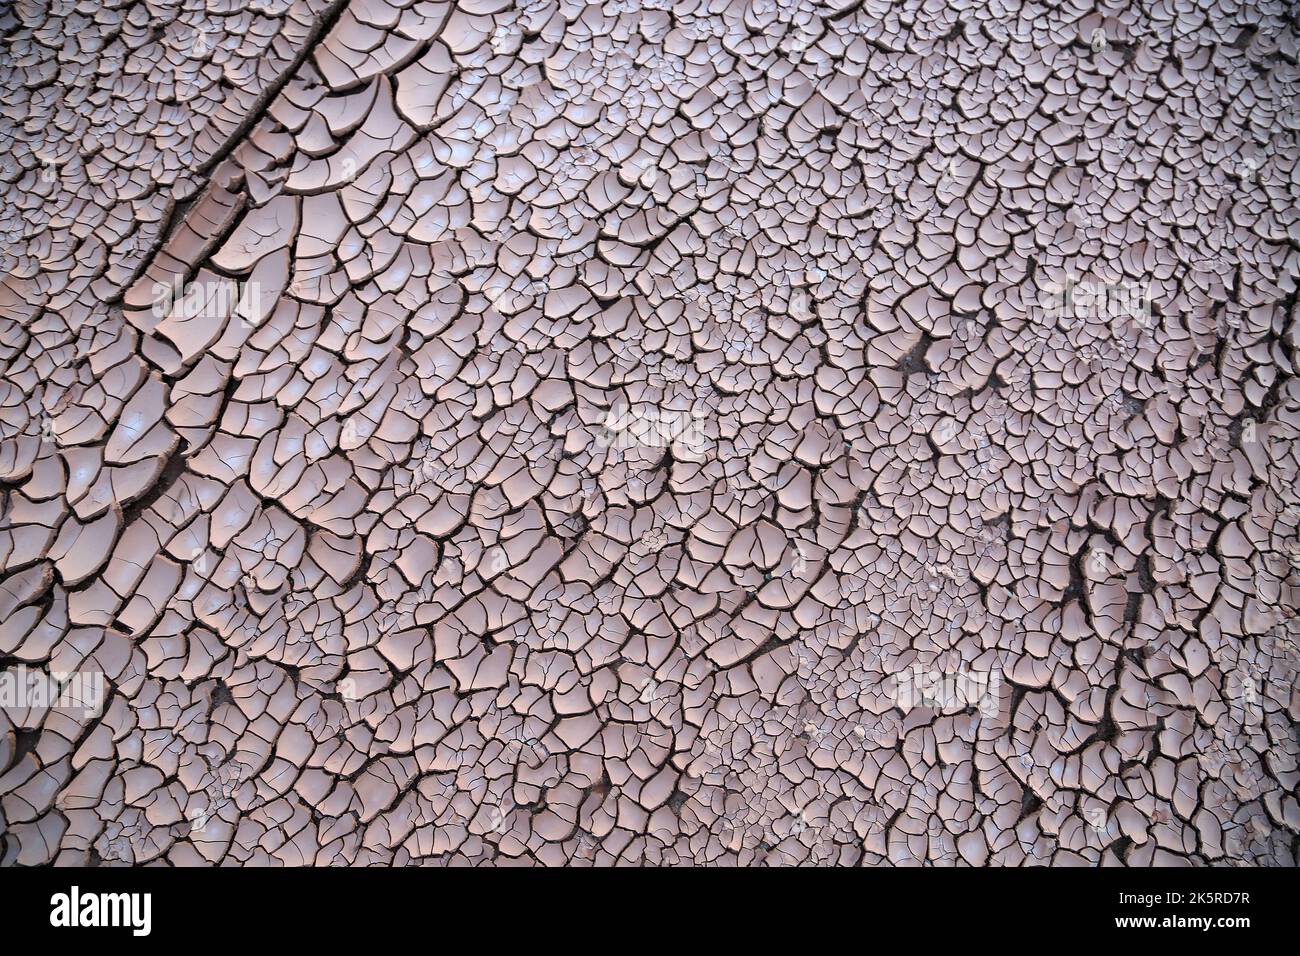 Cracked clay texture Stock Photo